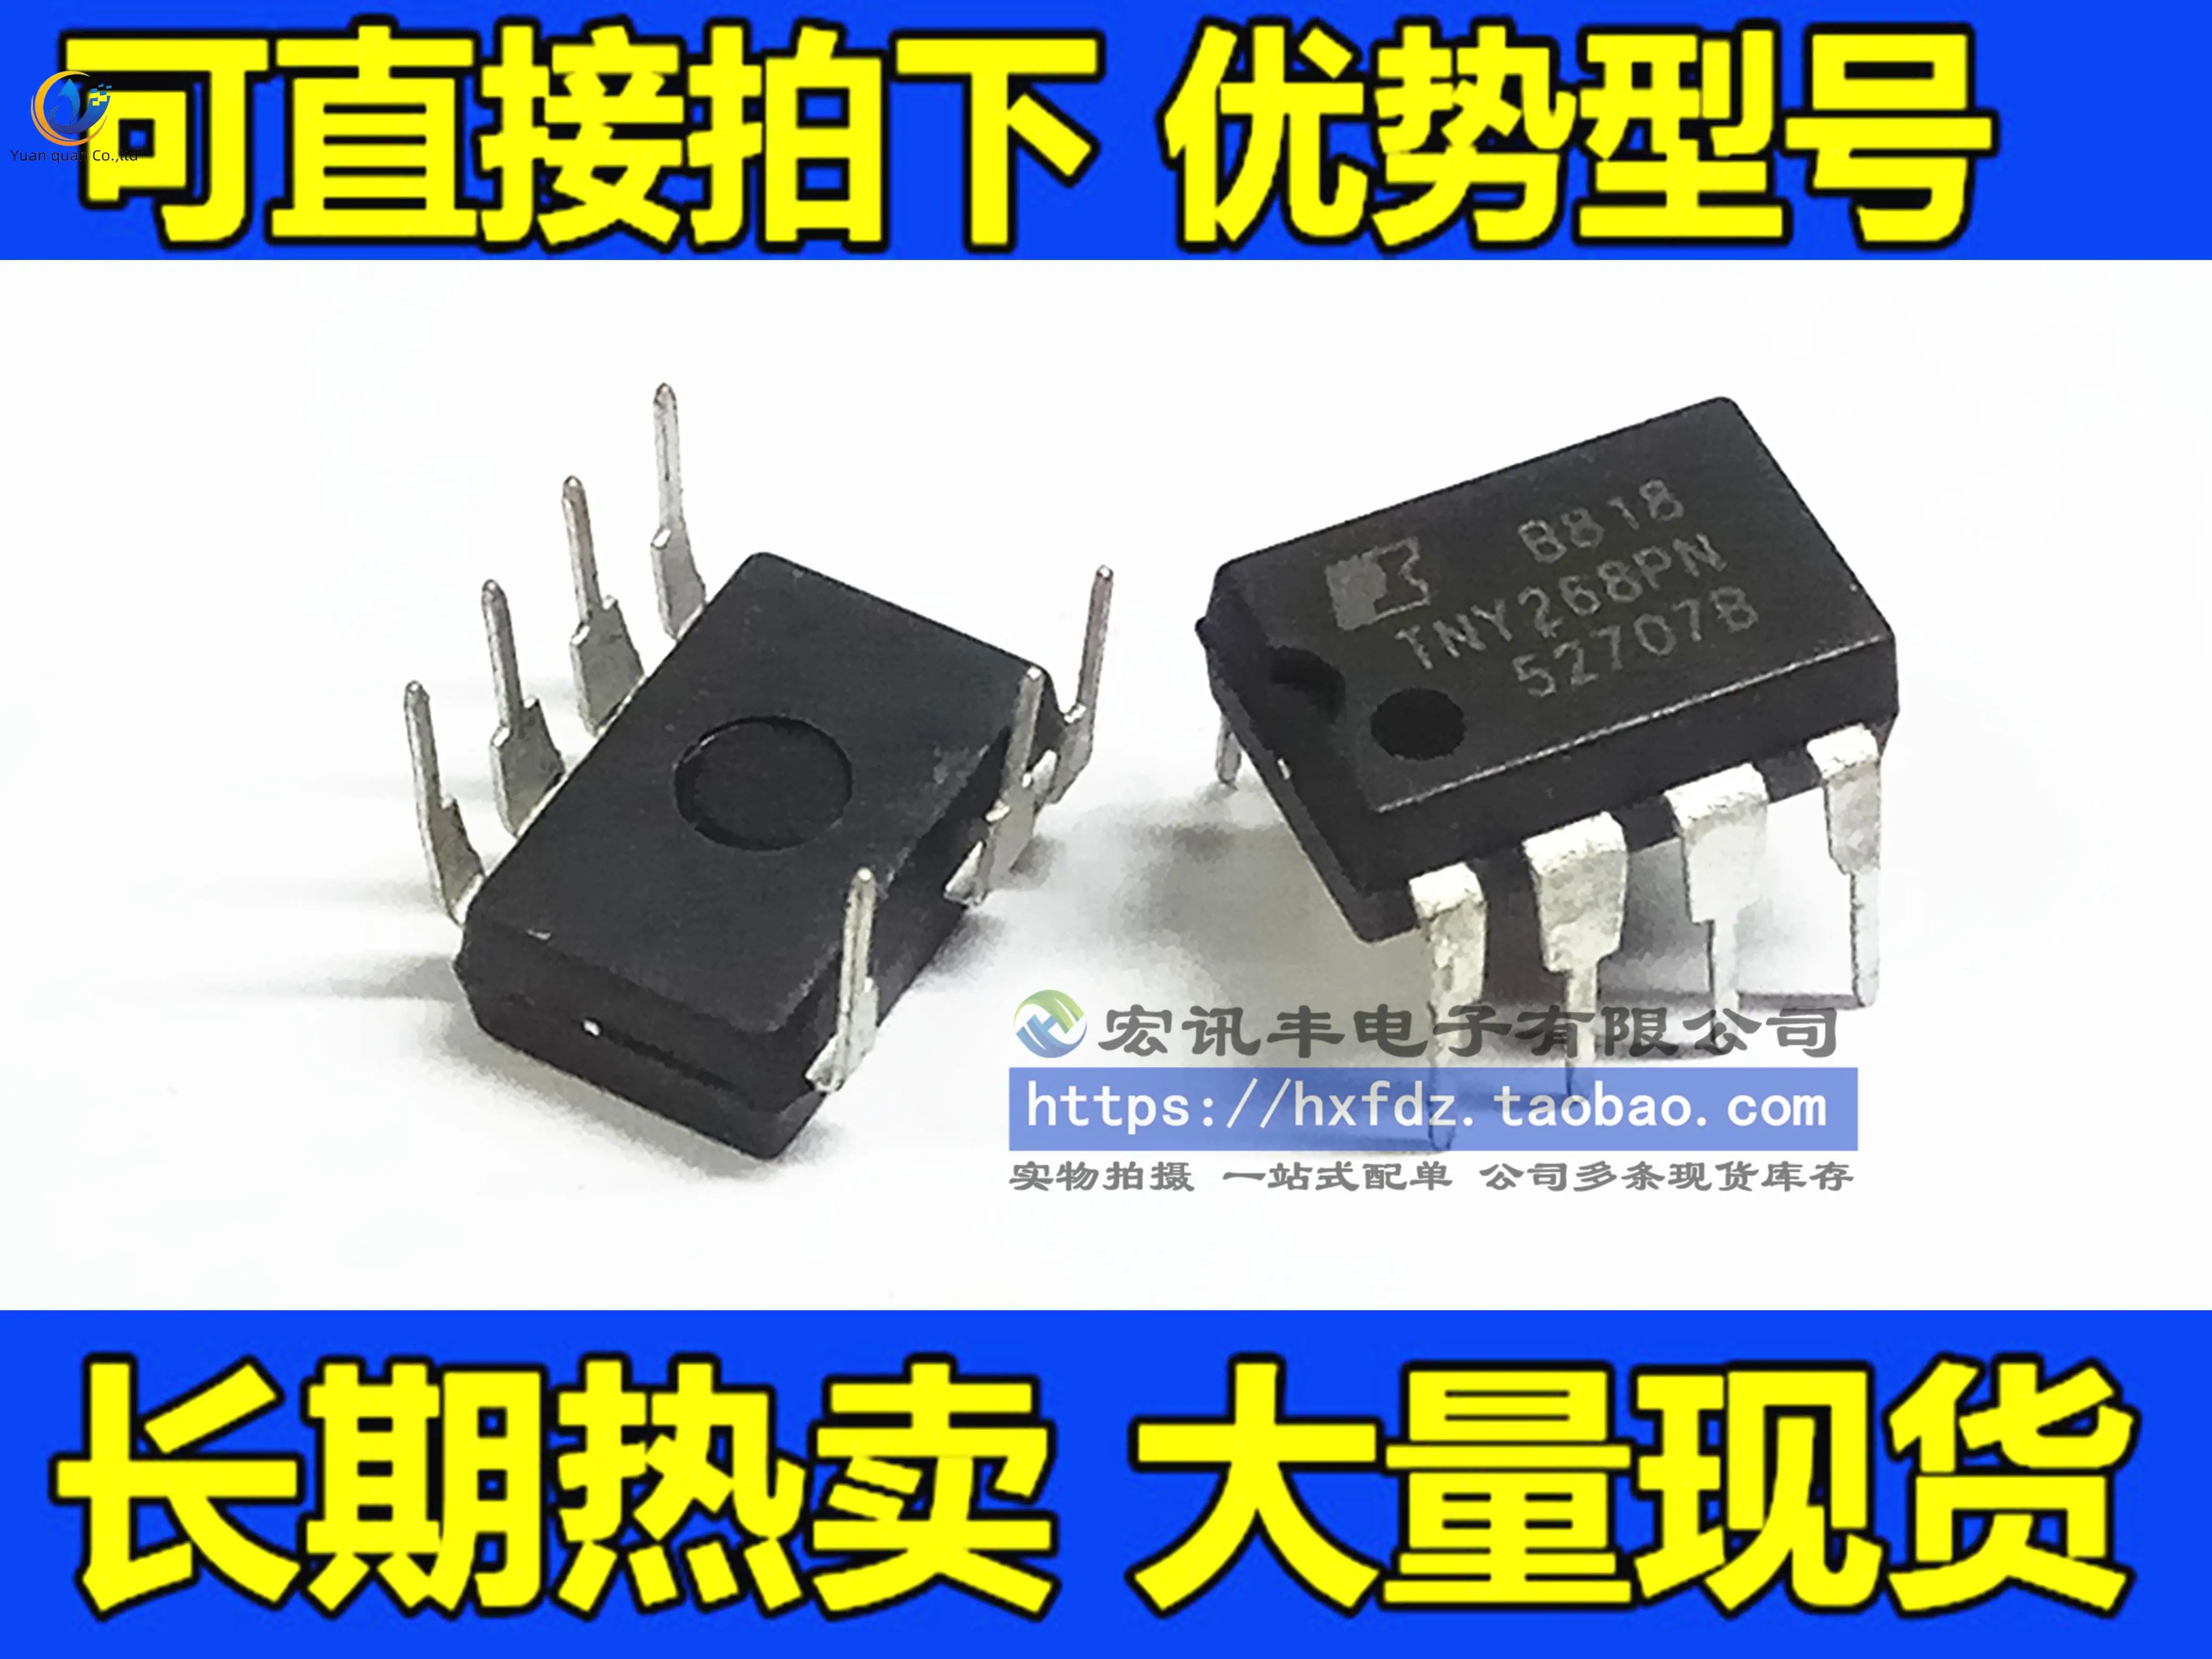 

30pcs original new TNY268PN TNY268P DIP-7 power management chip batch